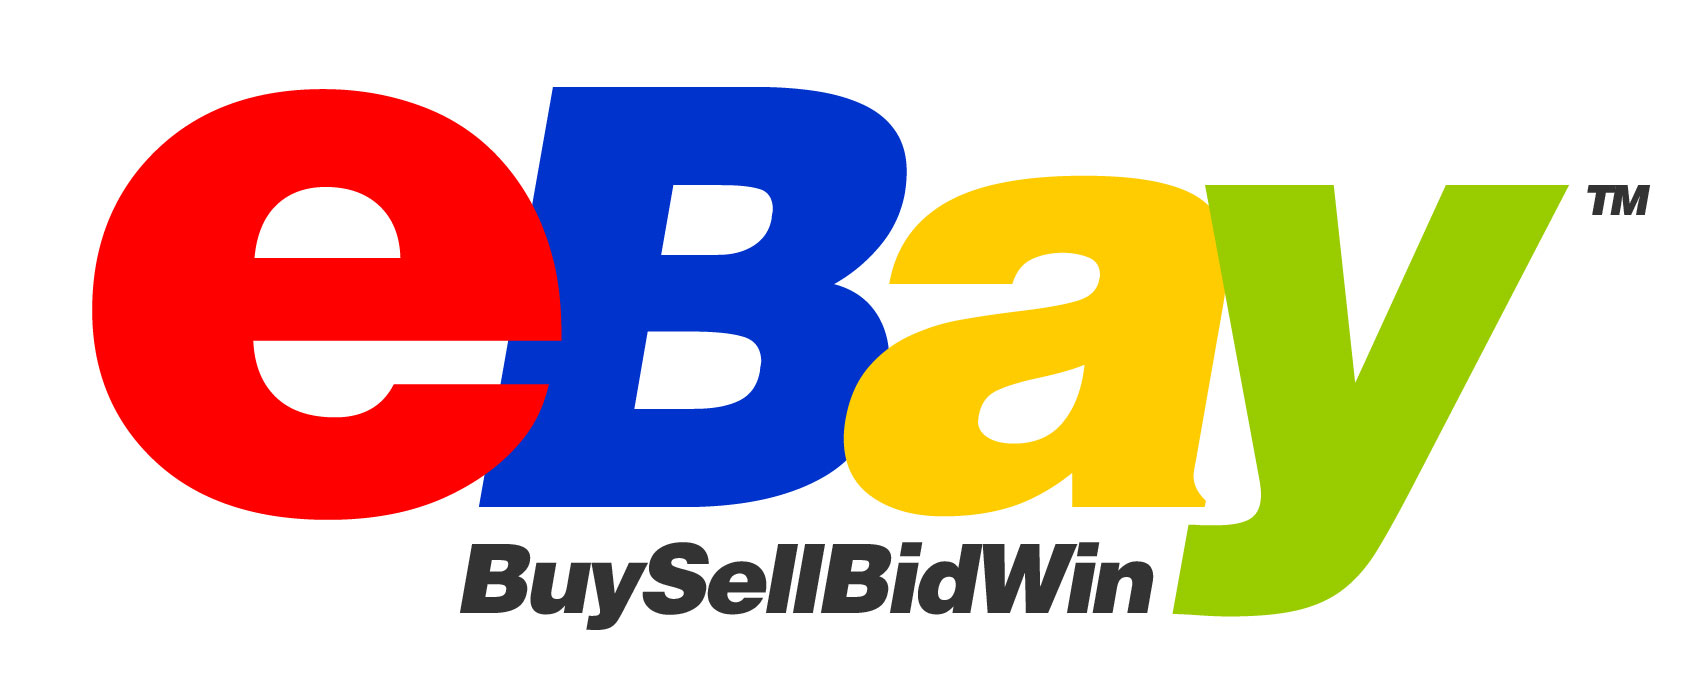 Ebay Logo Disaster What S That Font